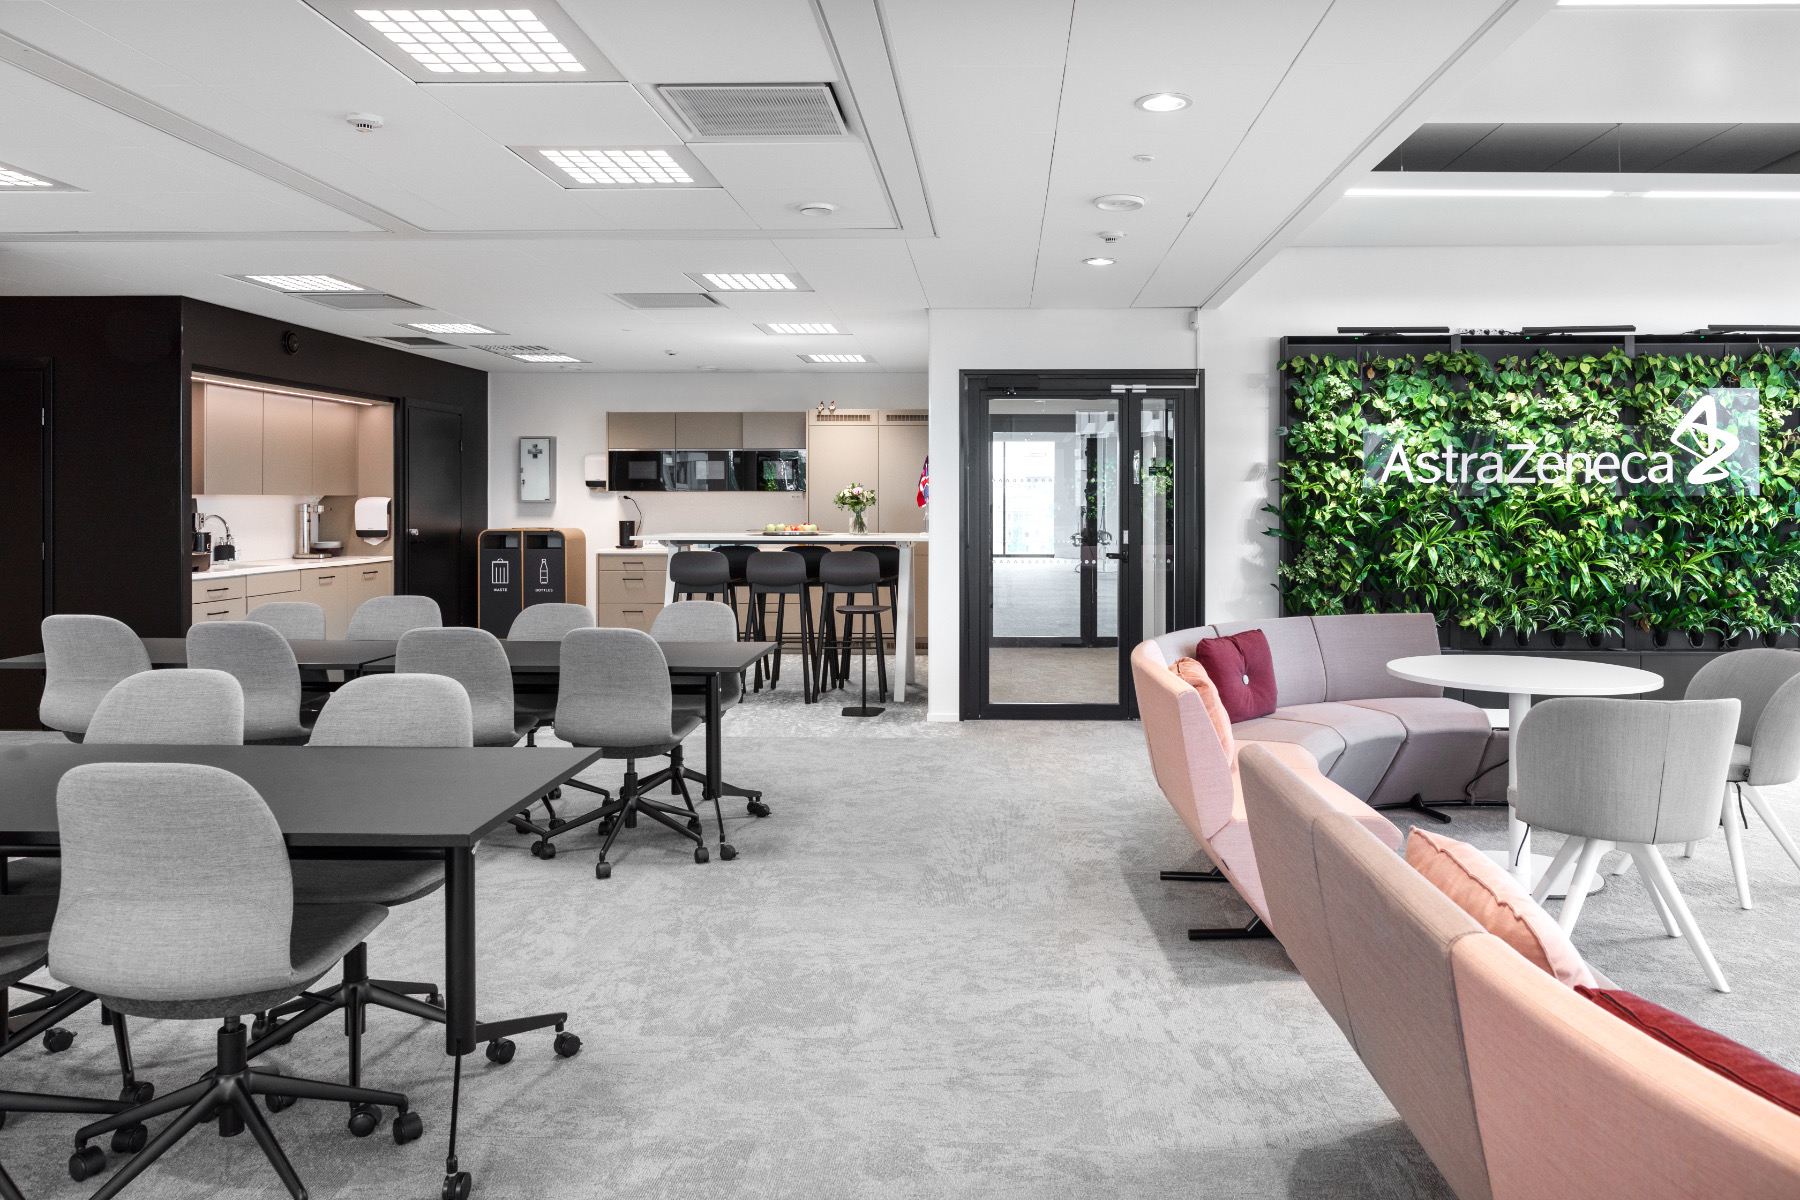 A Look Inside AstraZeneca’s New Espoo Office